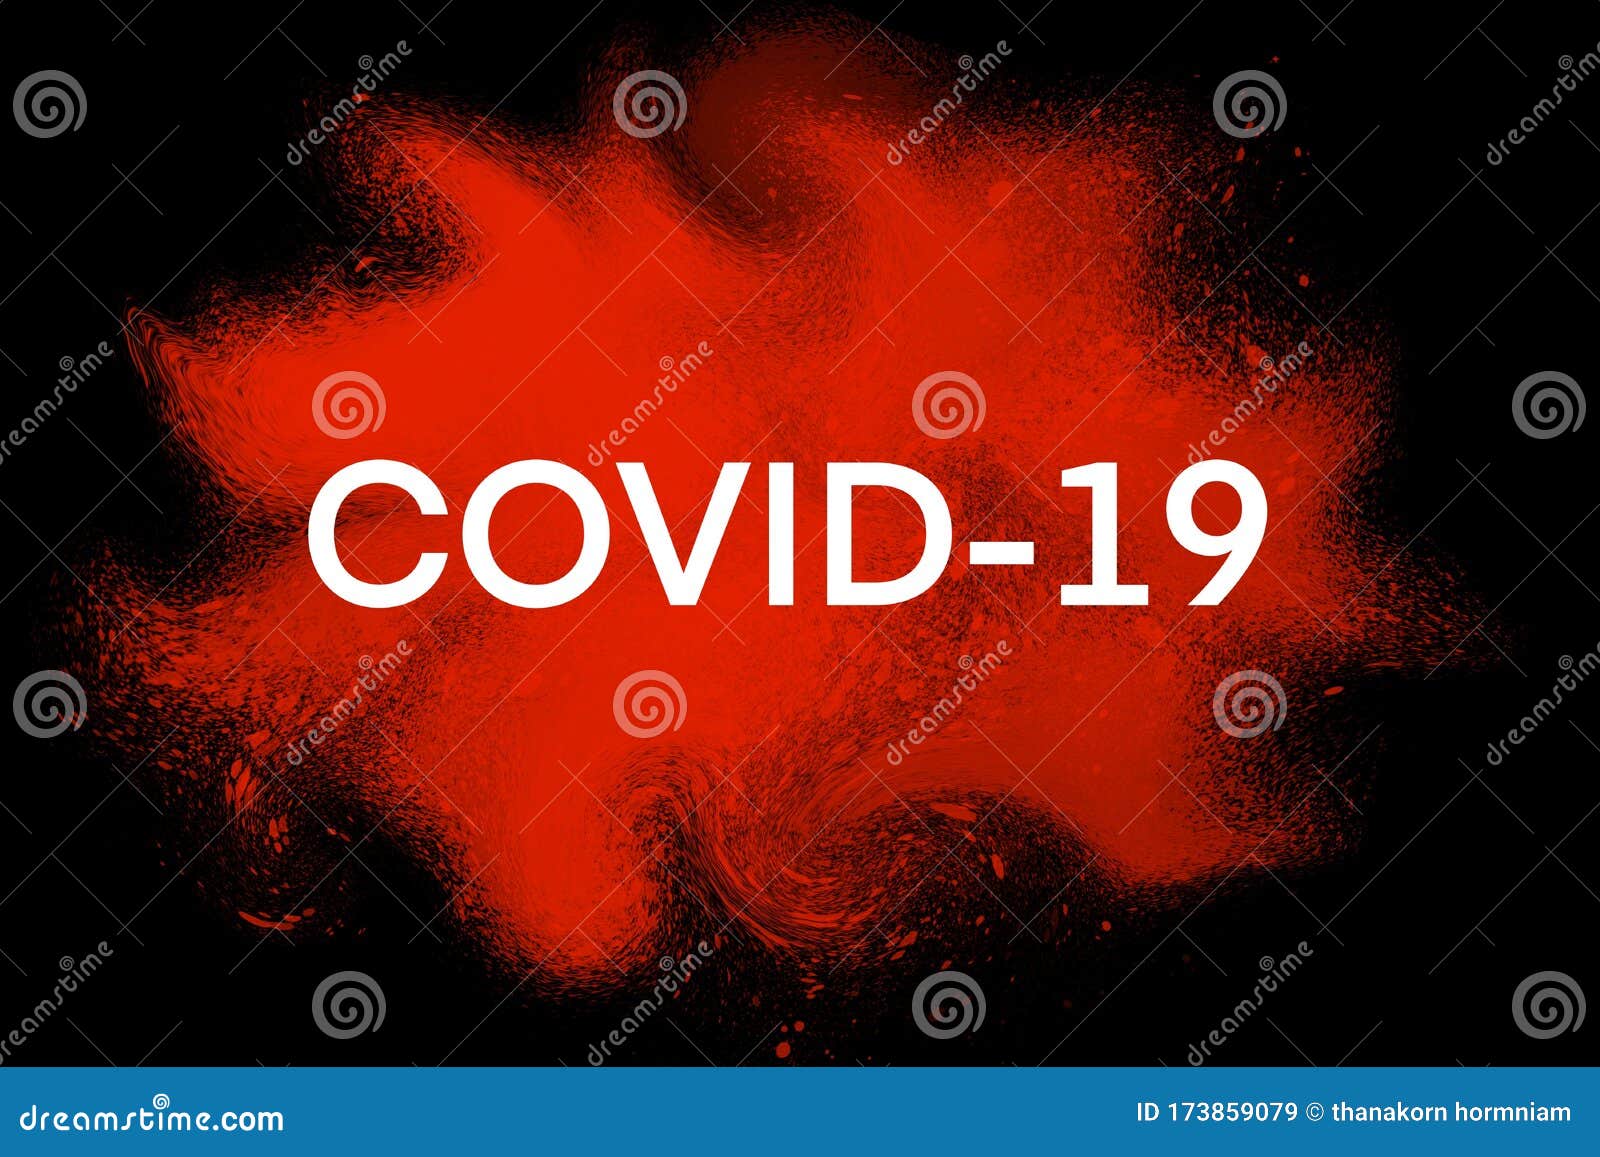 covid-19 ,coronavirus outbreak background concept